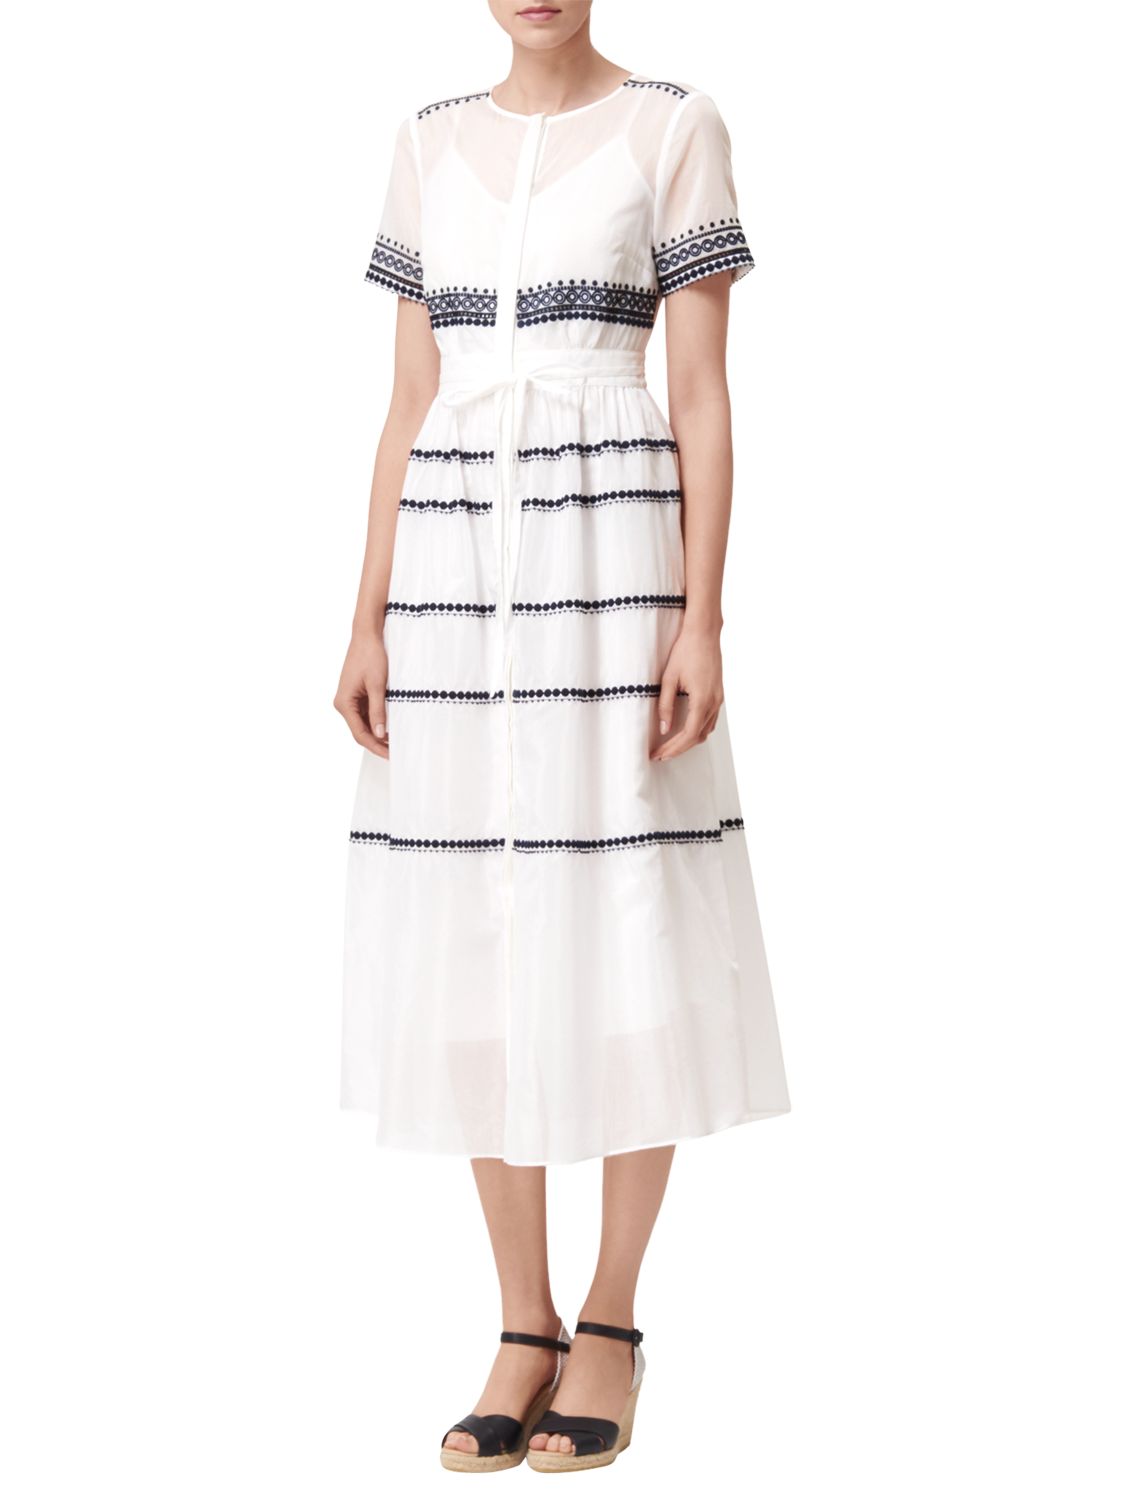 L.K. Bennett Tarley Embroidered Dress, Cream, 8